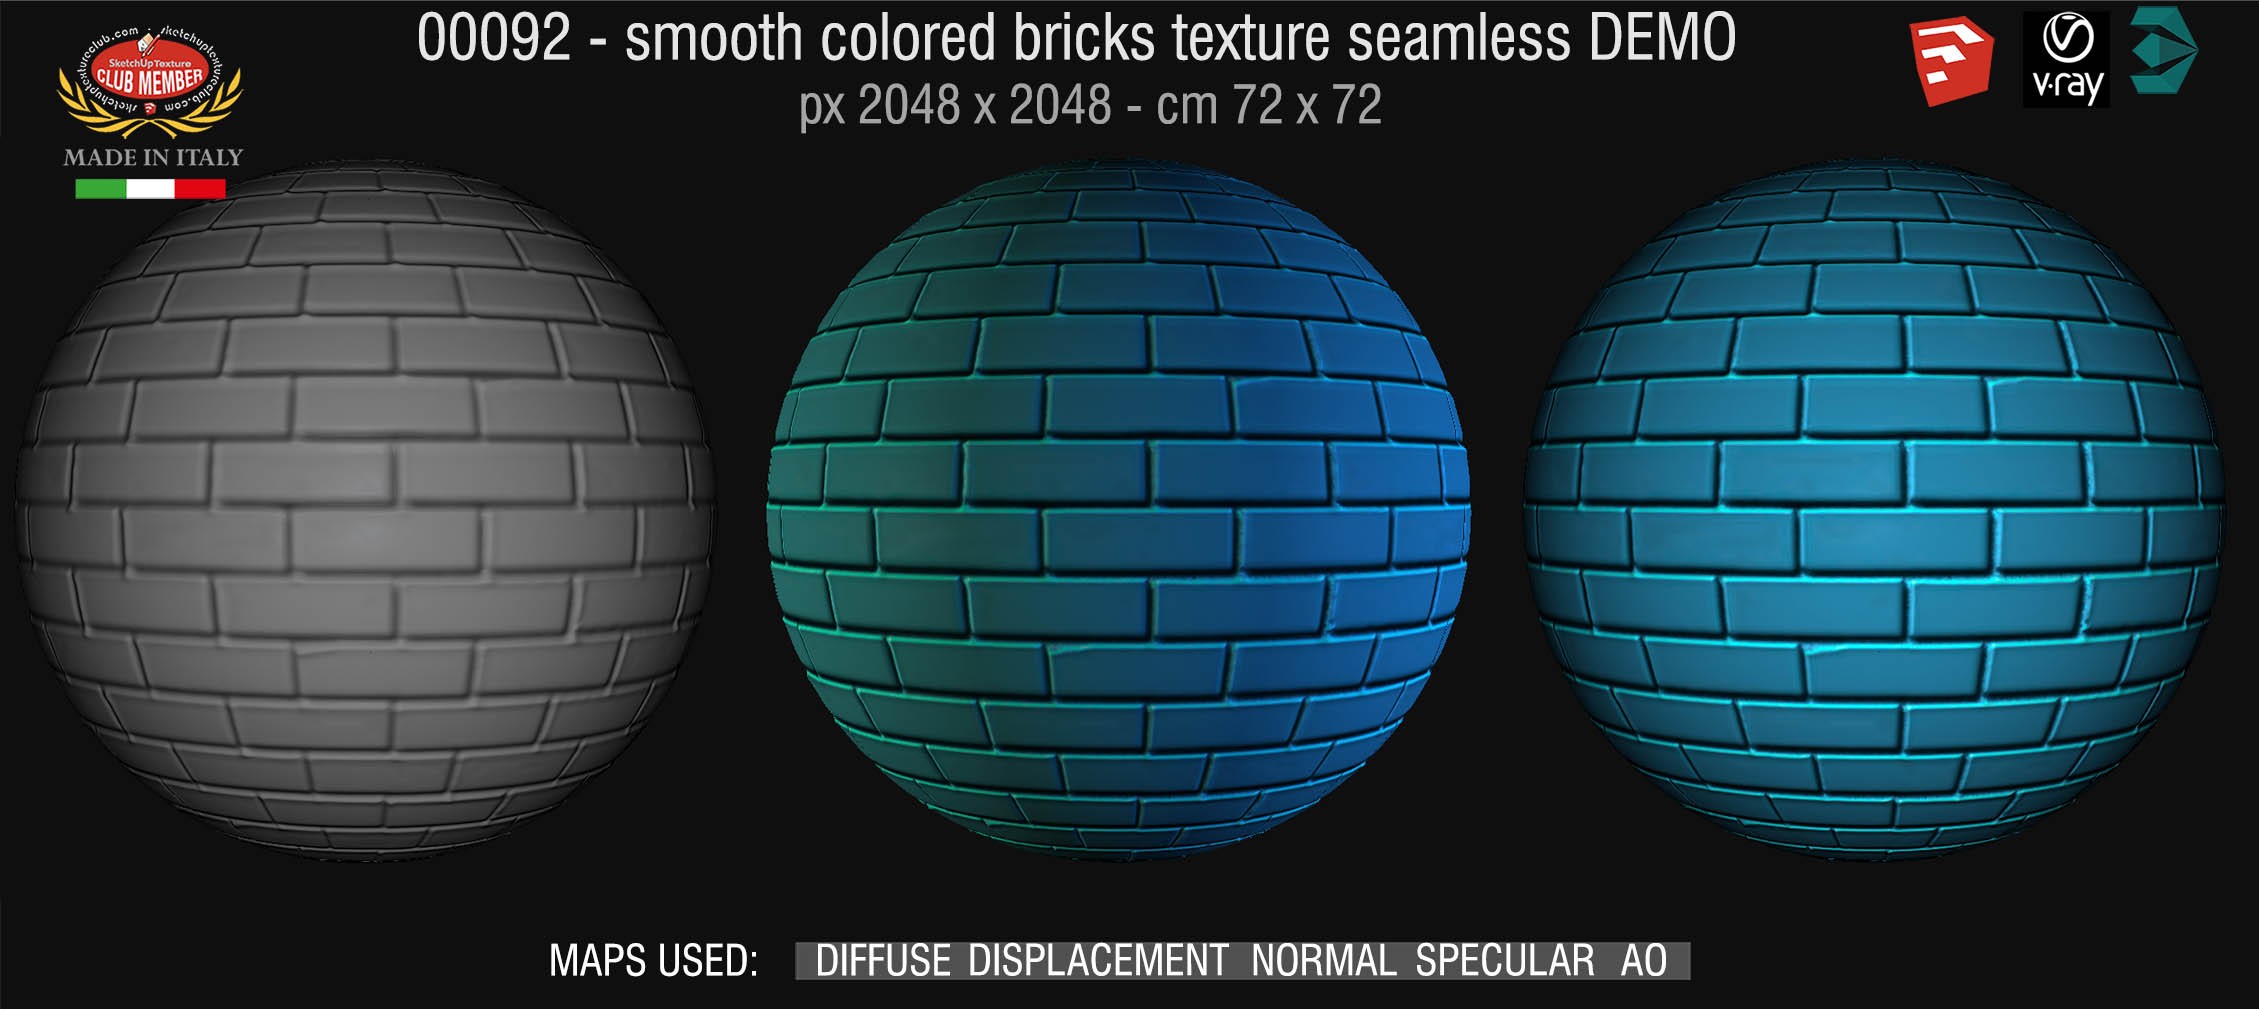 00092 smooth colored bricks texture seamless + maps DEMO